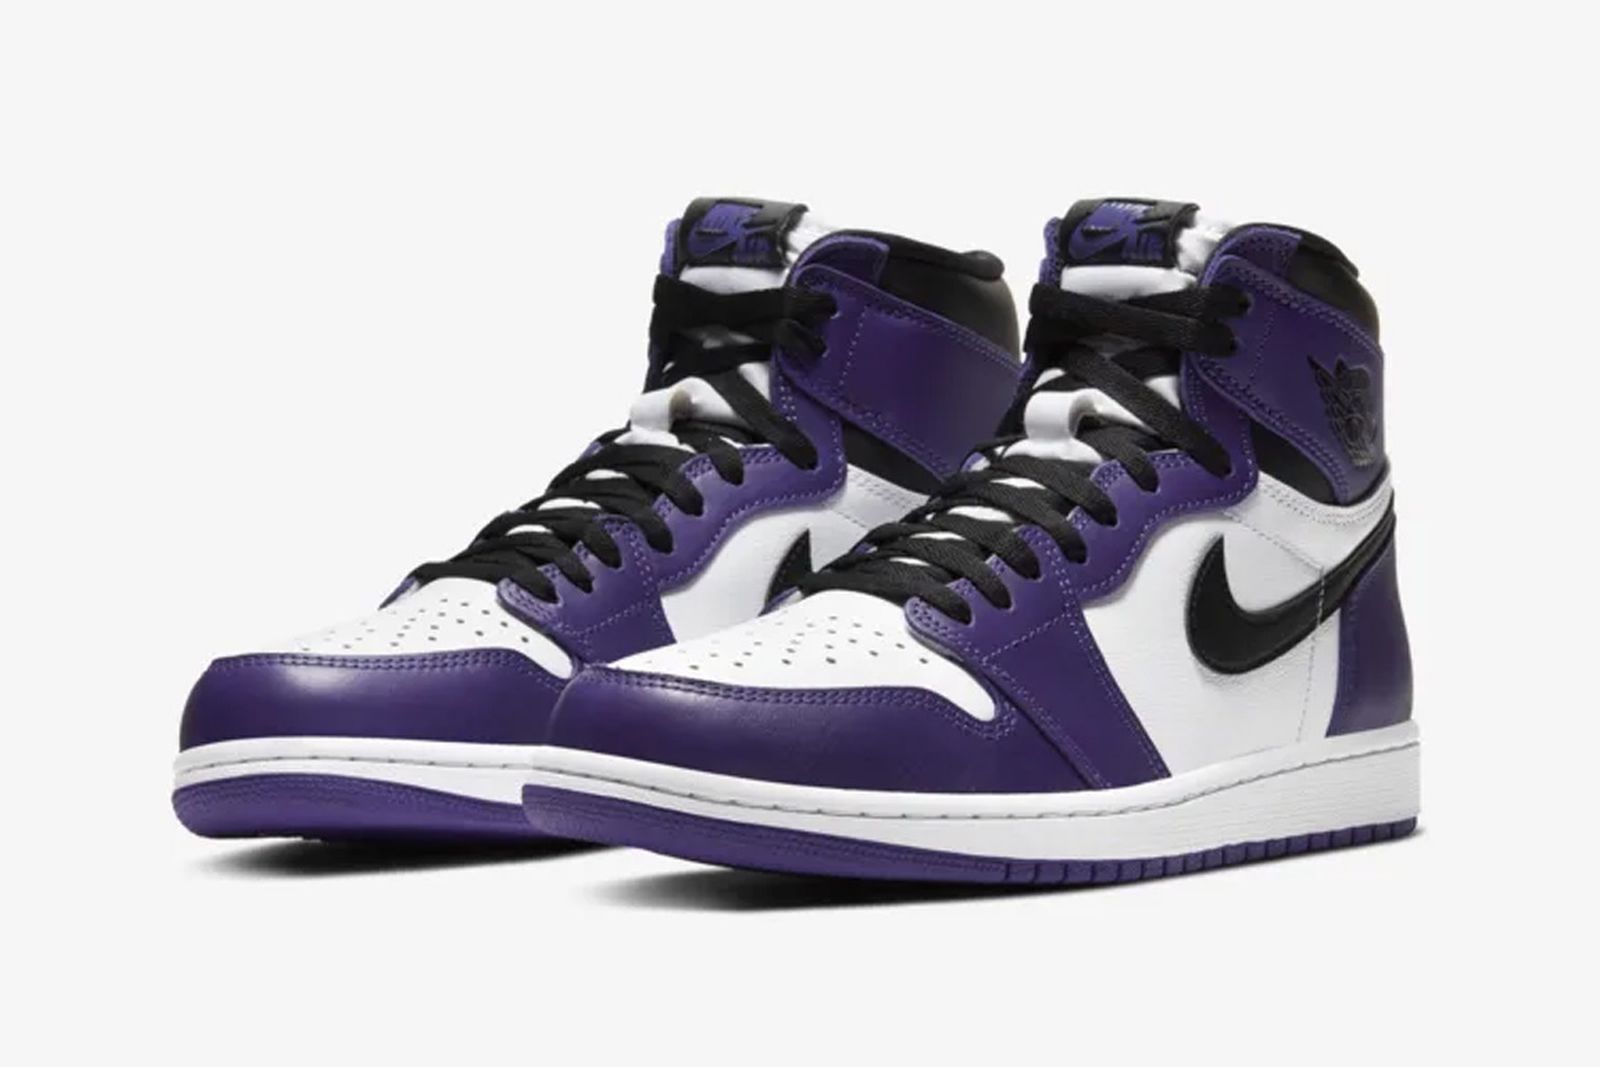 Nike Air Jordan 1 “Court Purple” 2020: Where to Buy This Weekend